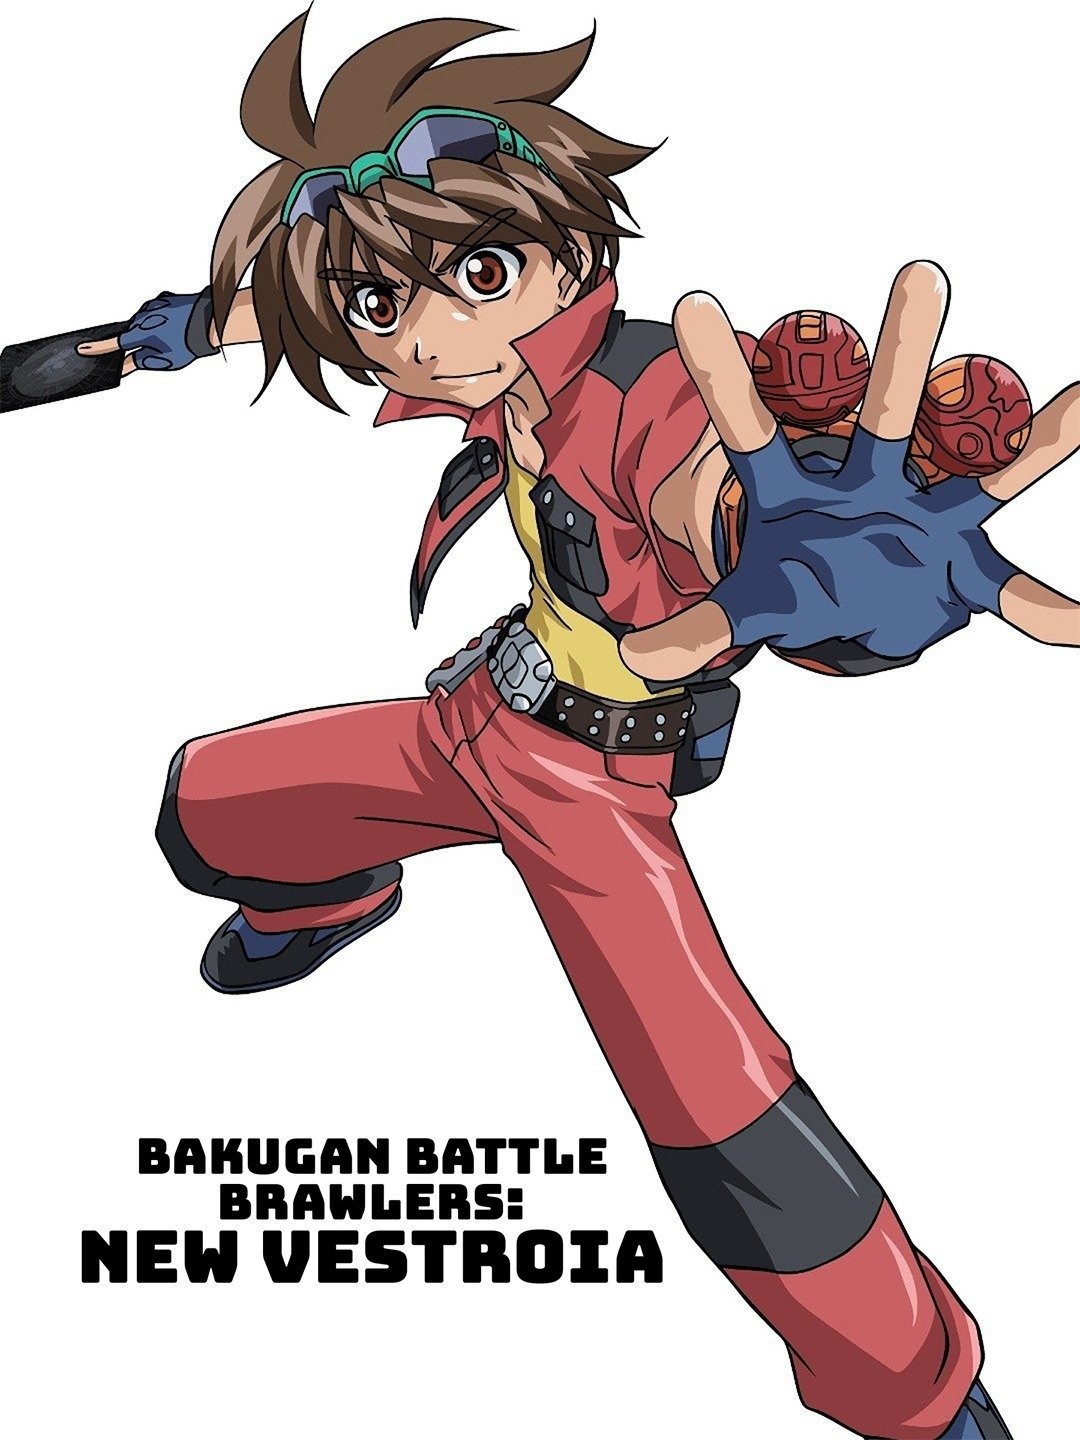 Anime Like Bakugan Battle Brawlers